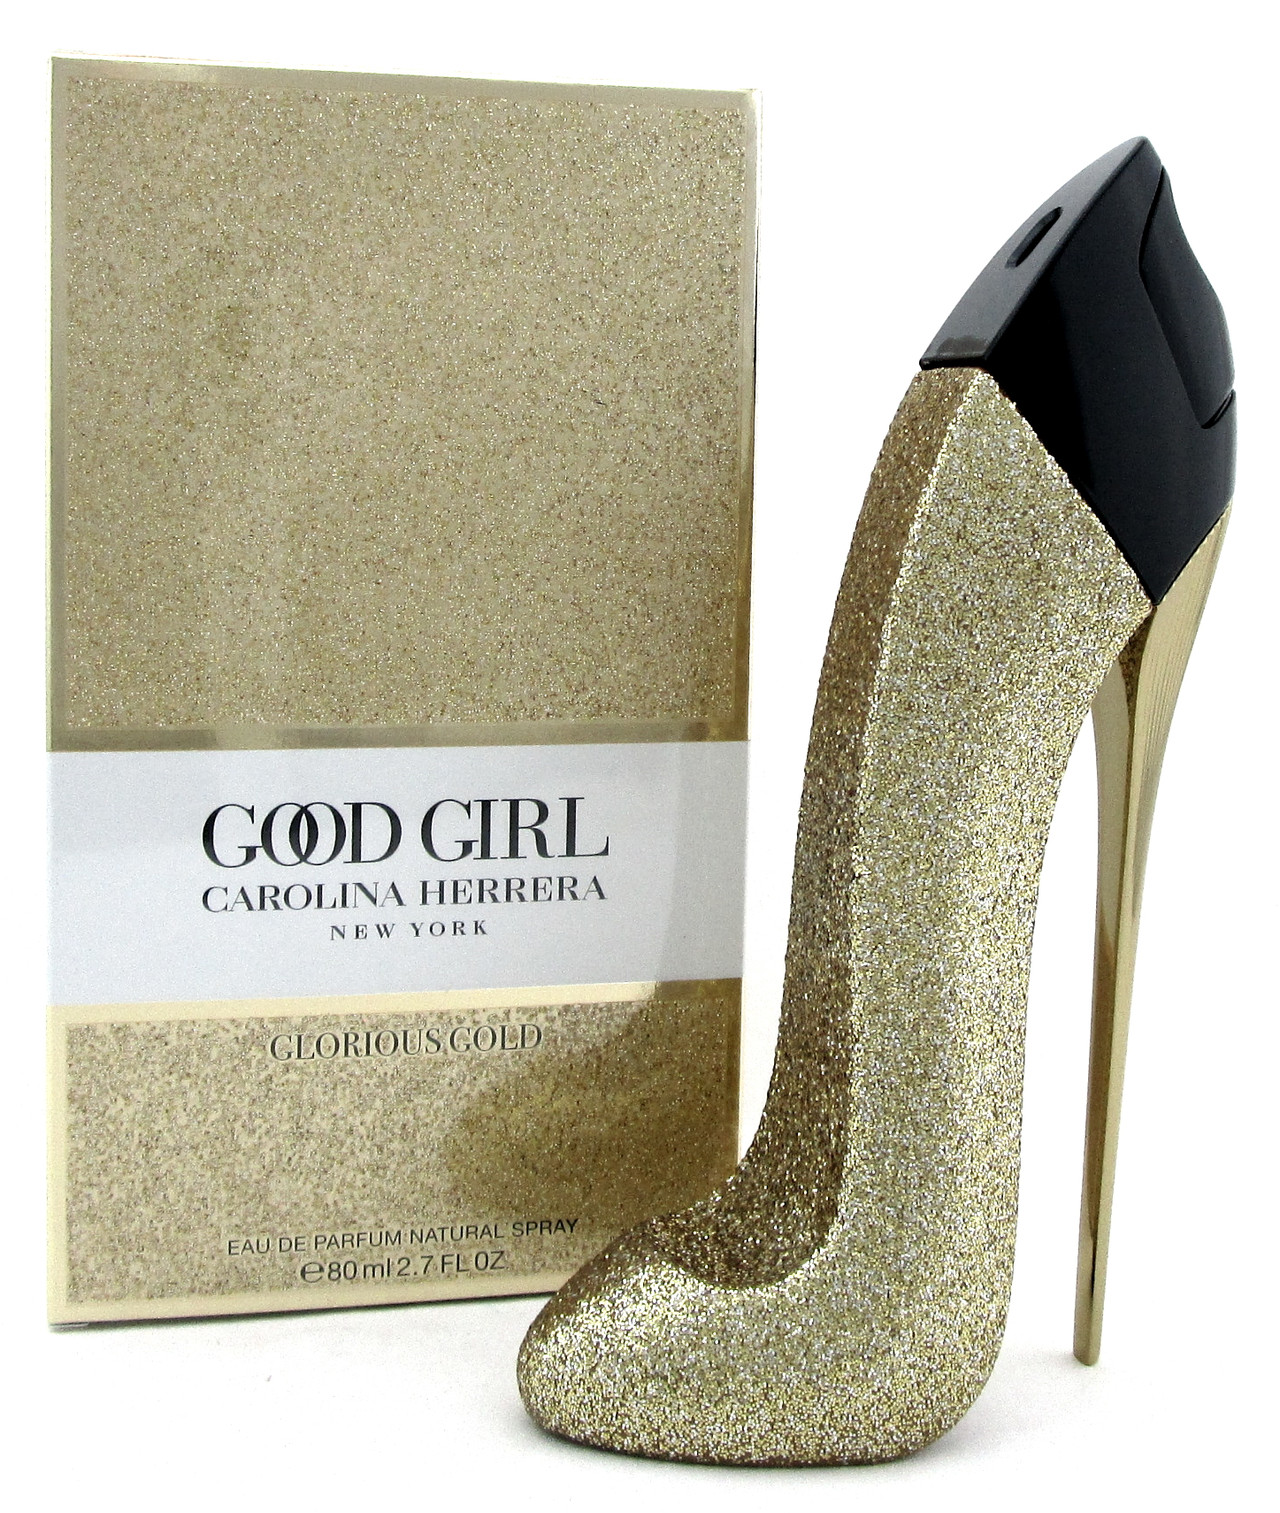 Good Girl Glorious Gold Perfume by Carolina Herrera 2.7 oz. Eau de ...